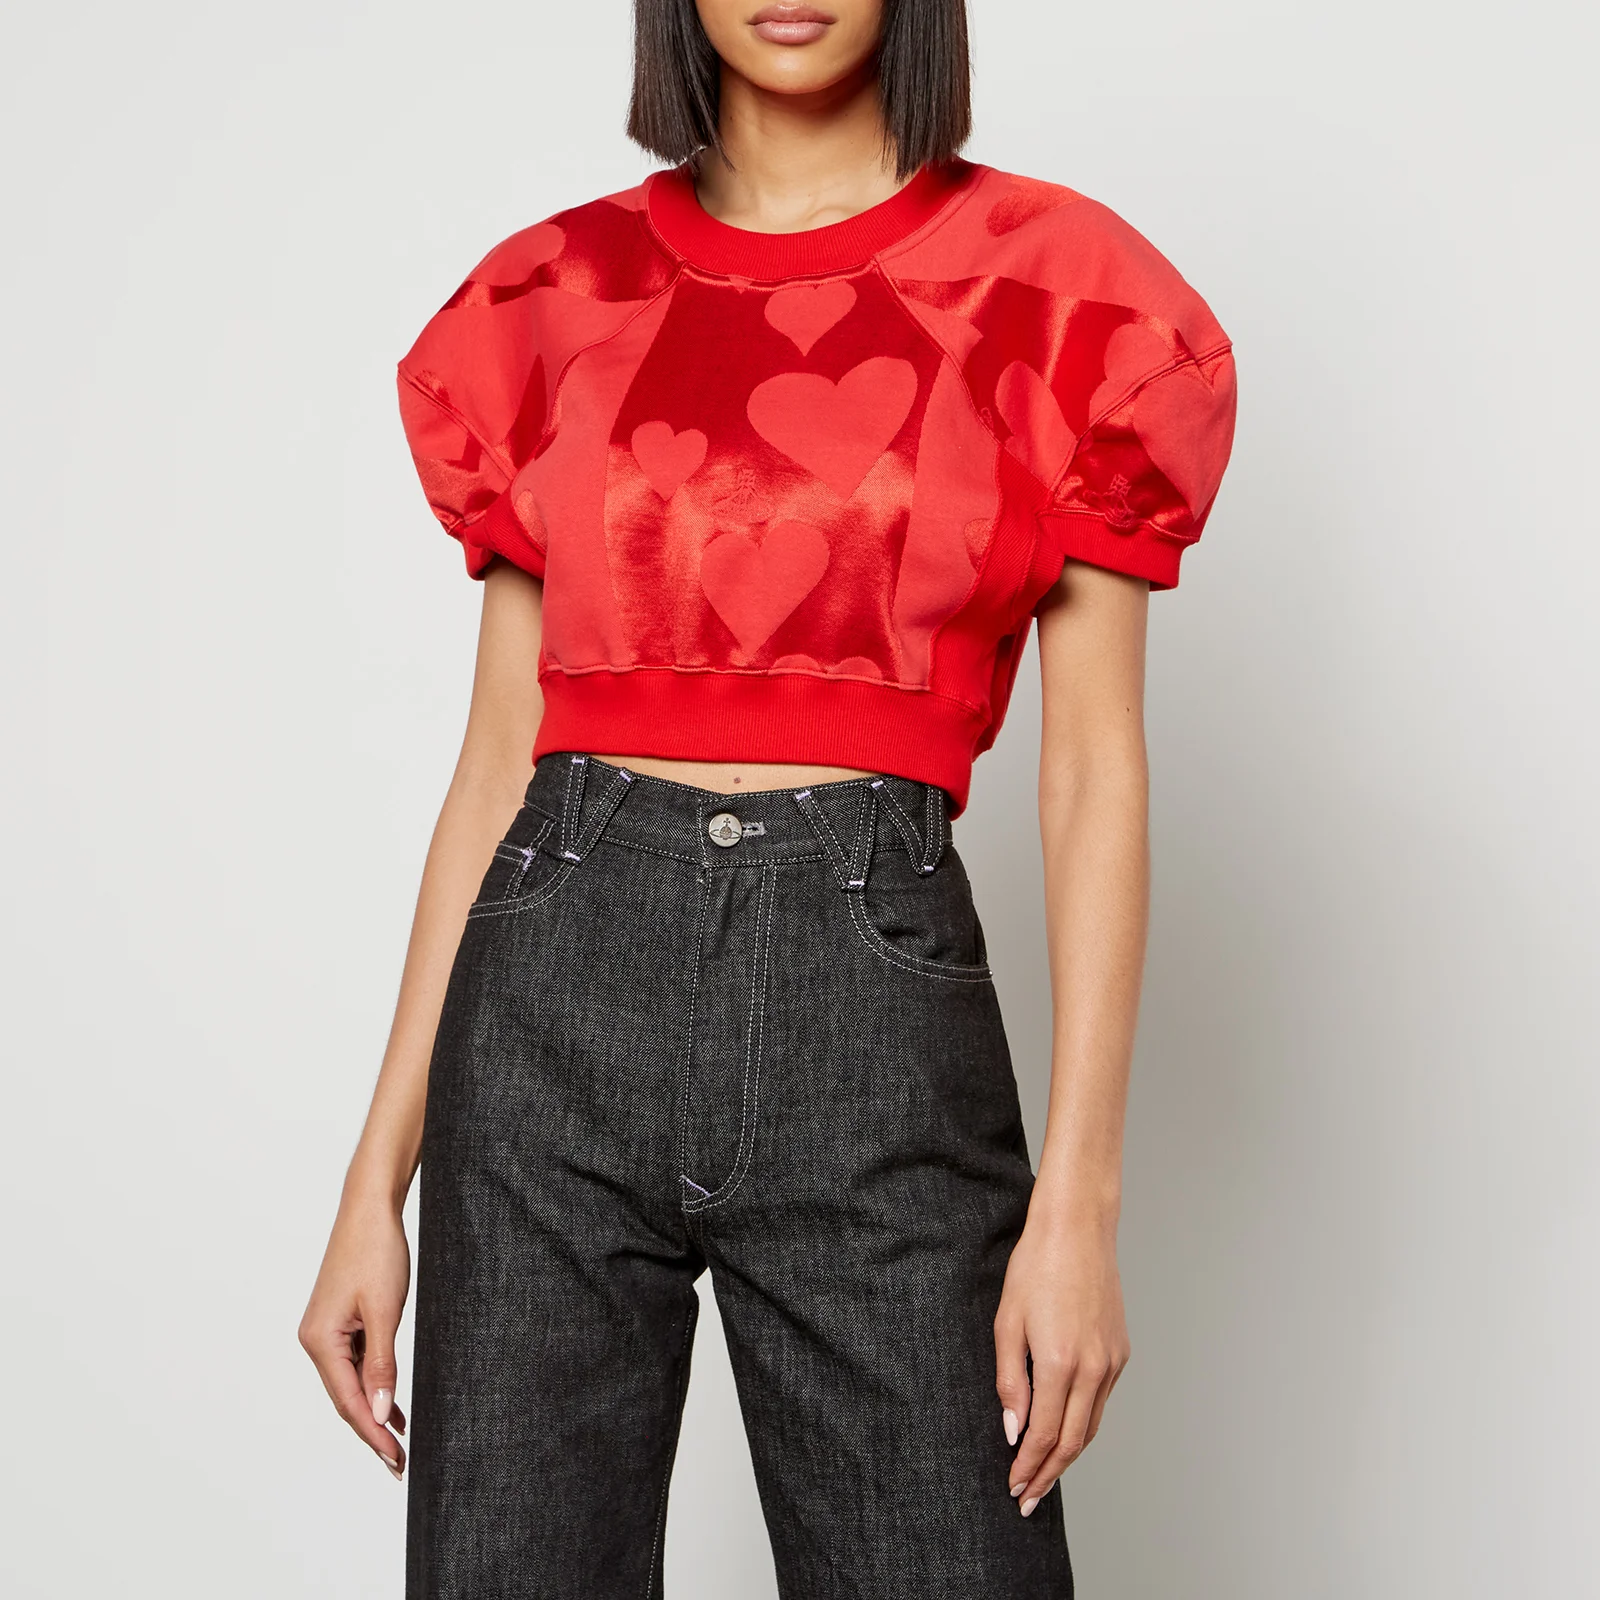 Vivienne Westwood Cotton-Blend Jacquard Cropped T-Shirt Jumper Image 1